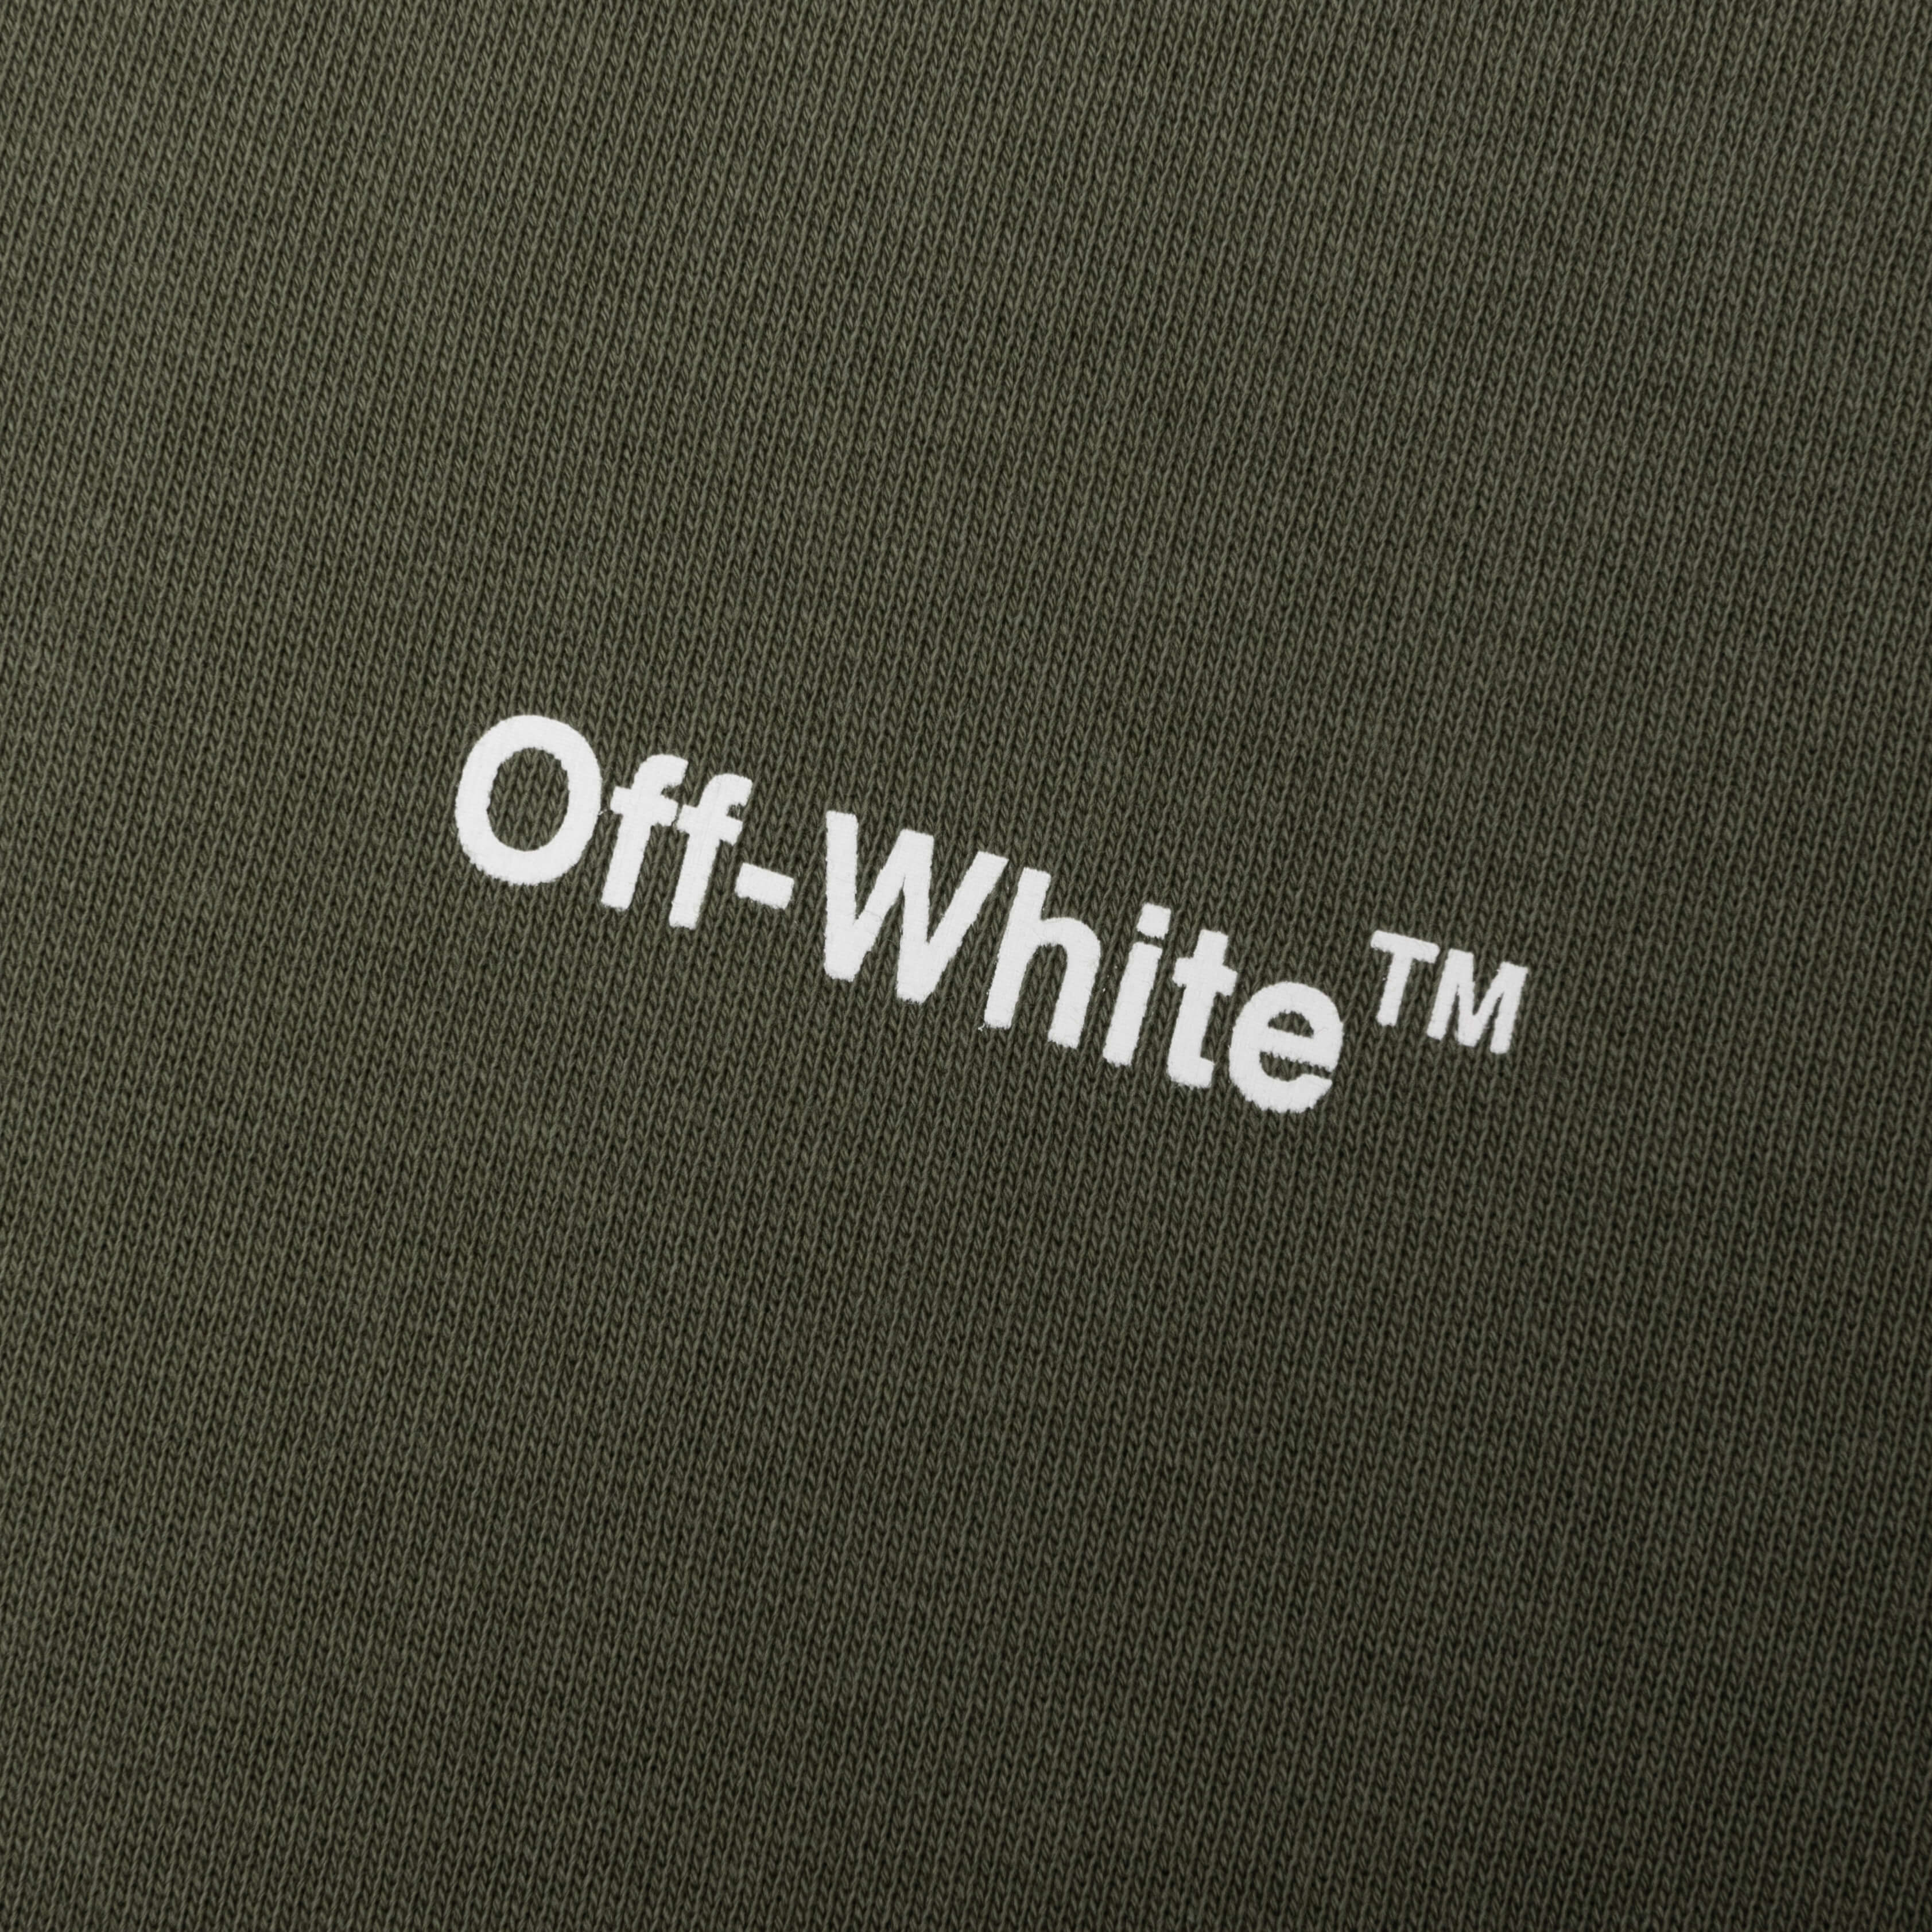 Off-White c/o Virgil Abloh Off Whitetm Military Multi Pocket Jacket in  Green for Men